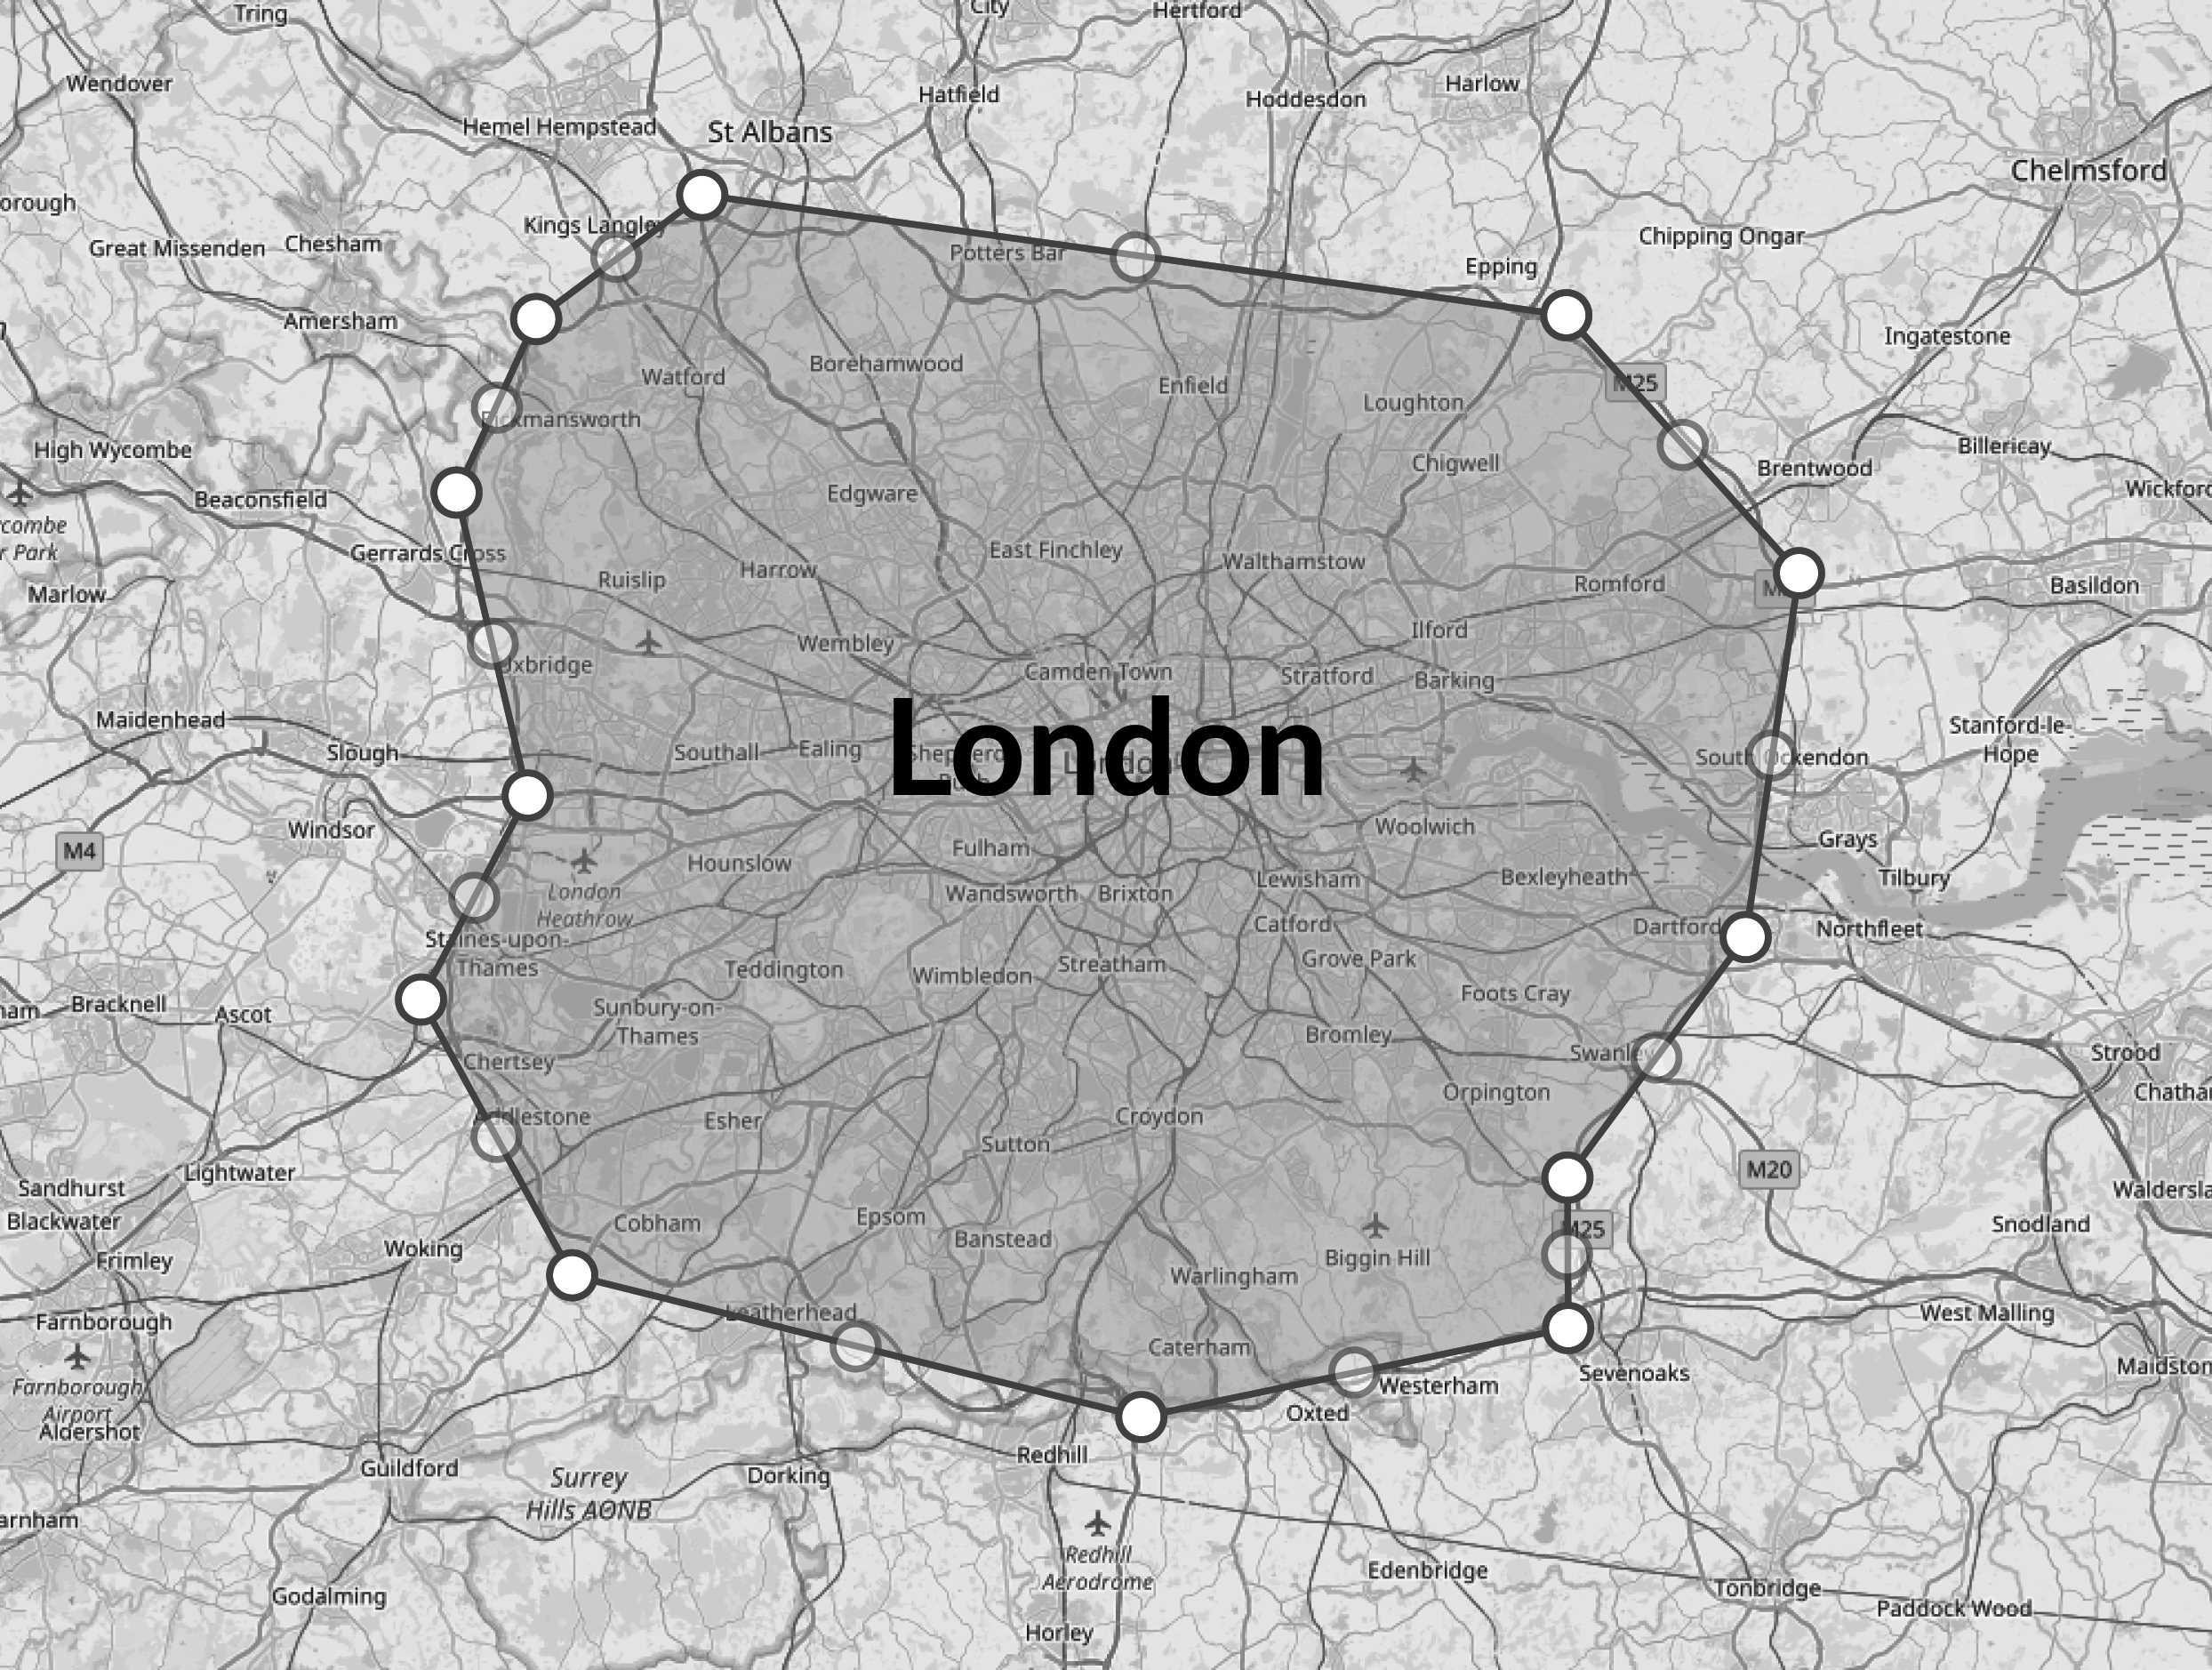 Polygon for the London Orbital